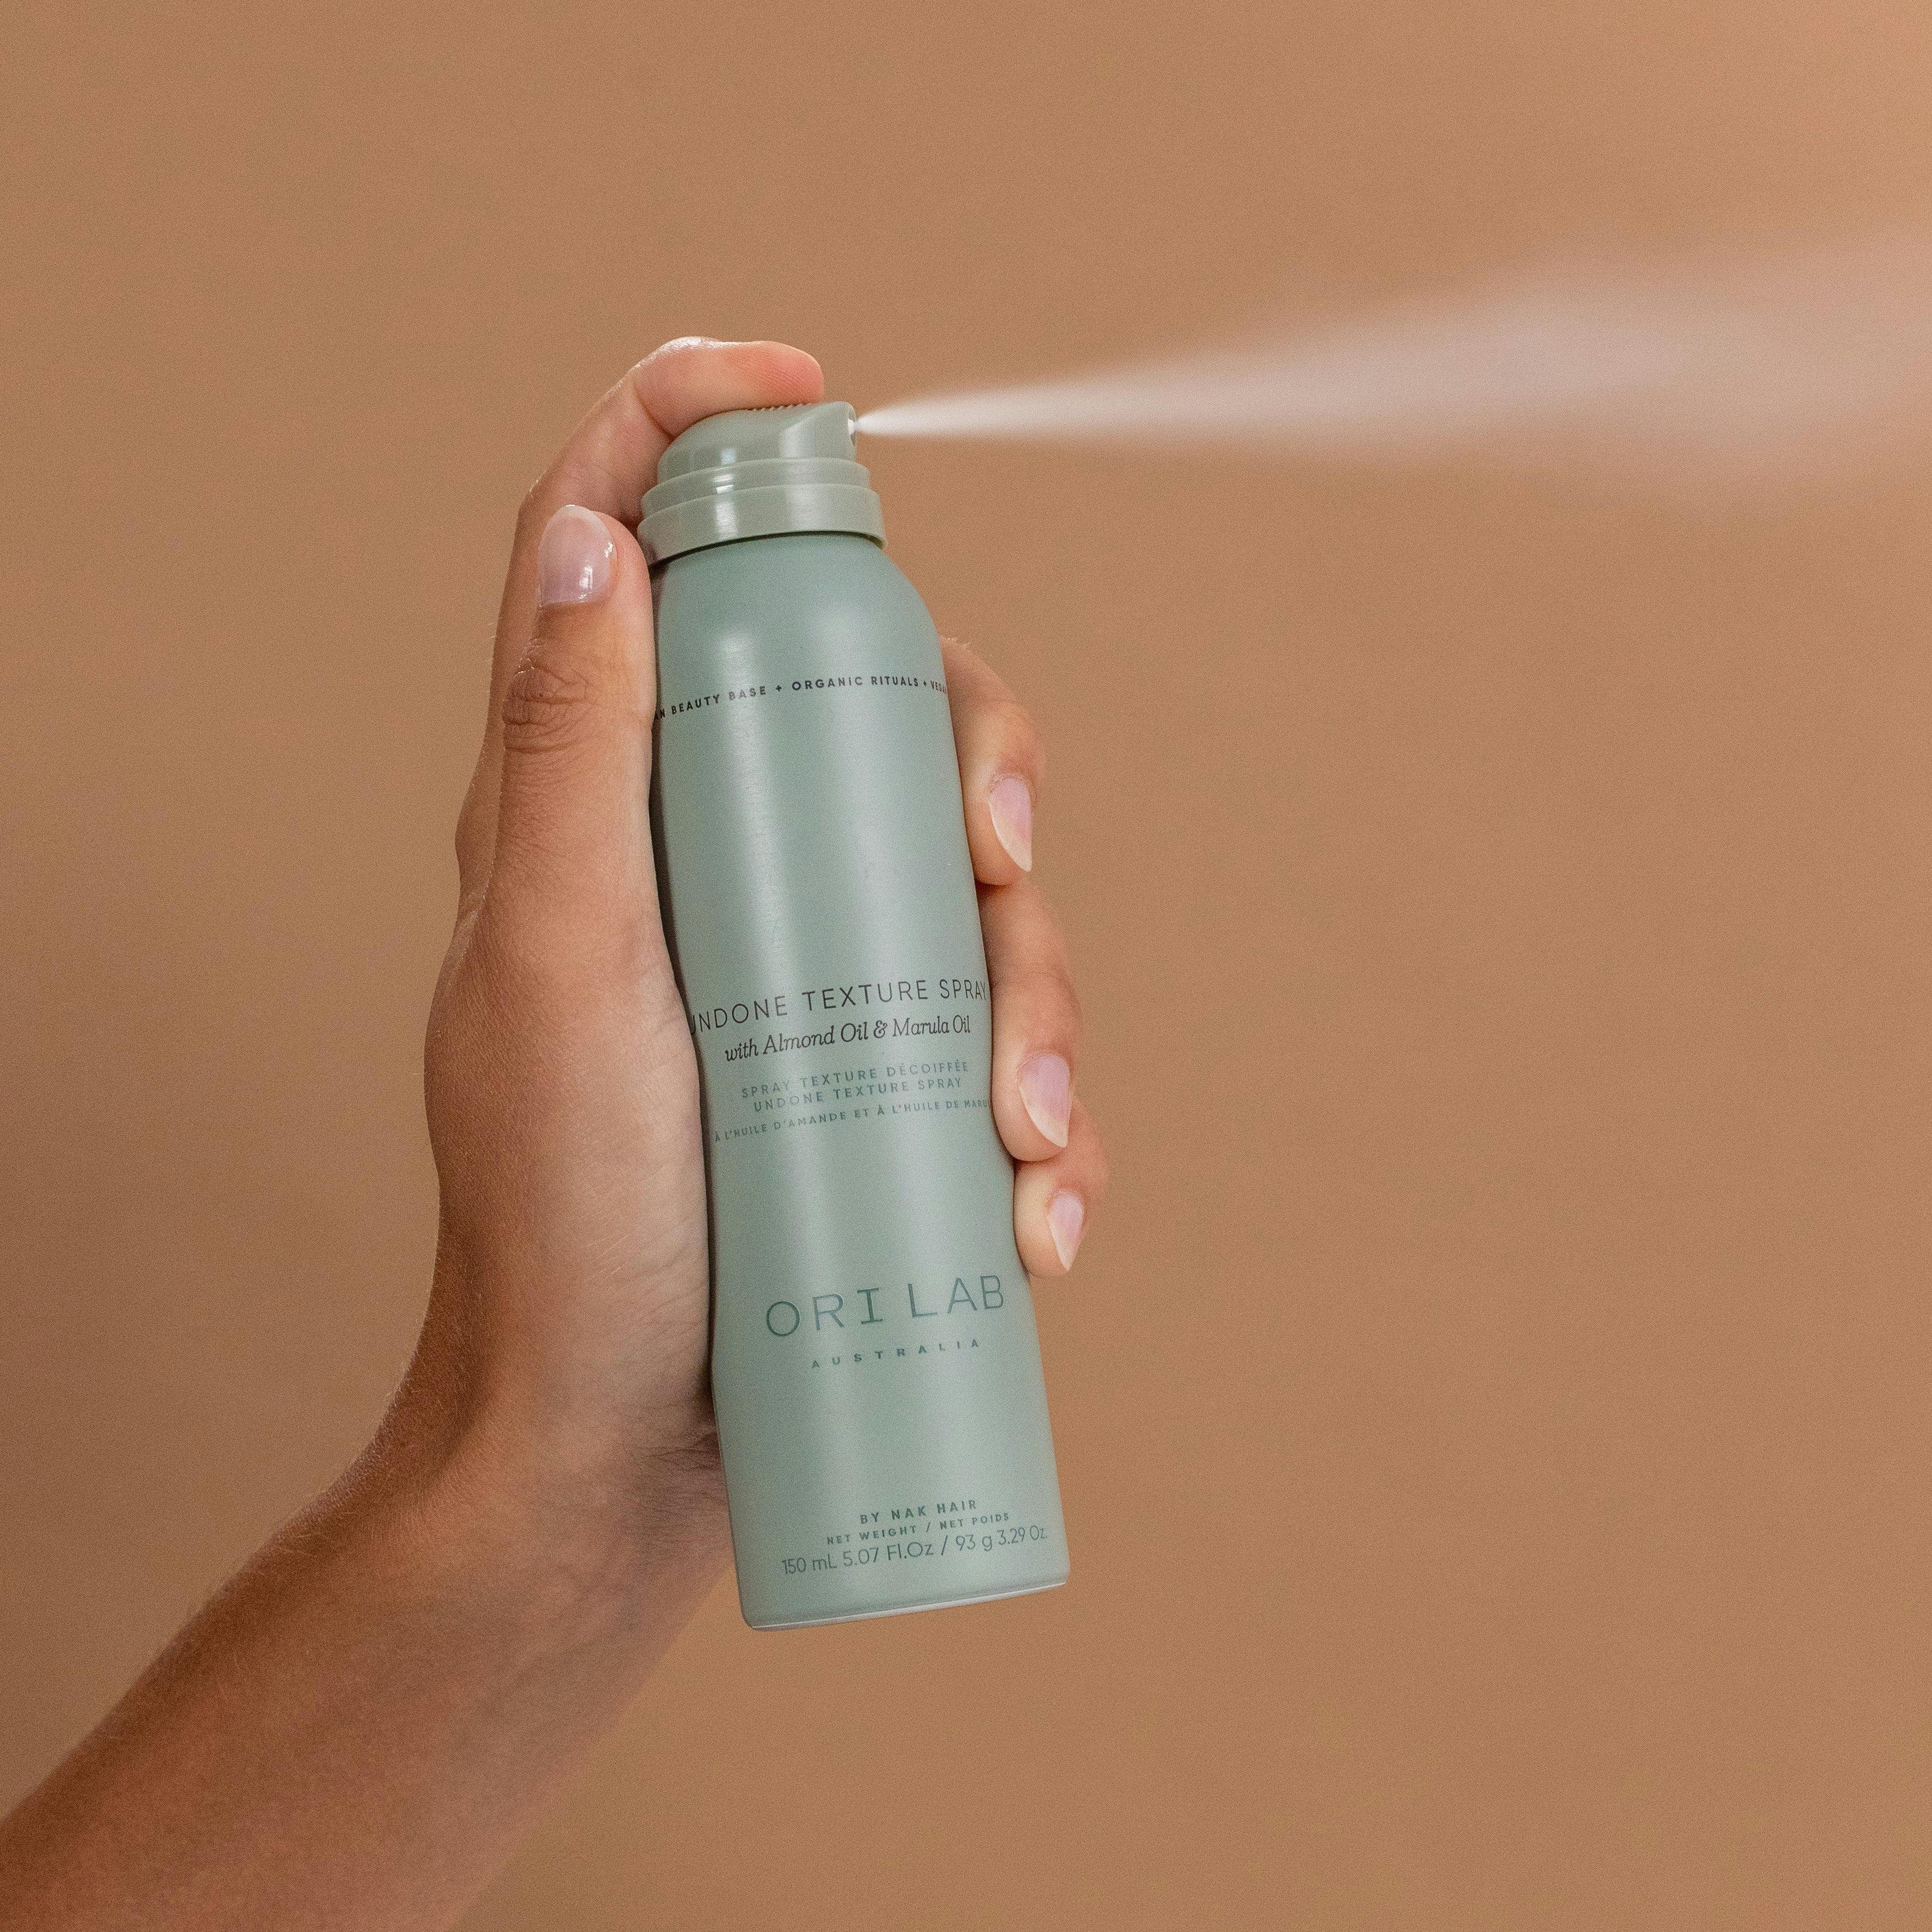 ORI LAB Undone Texture Spray 150g